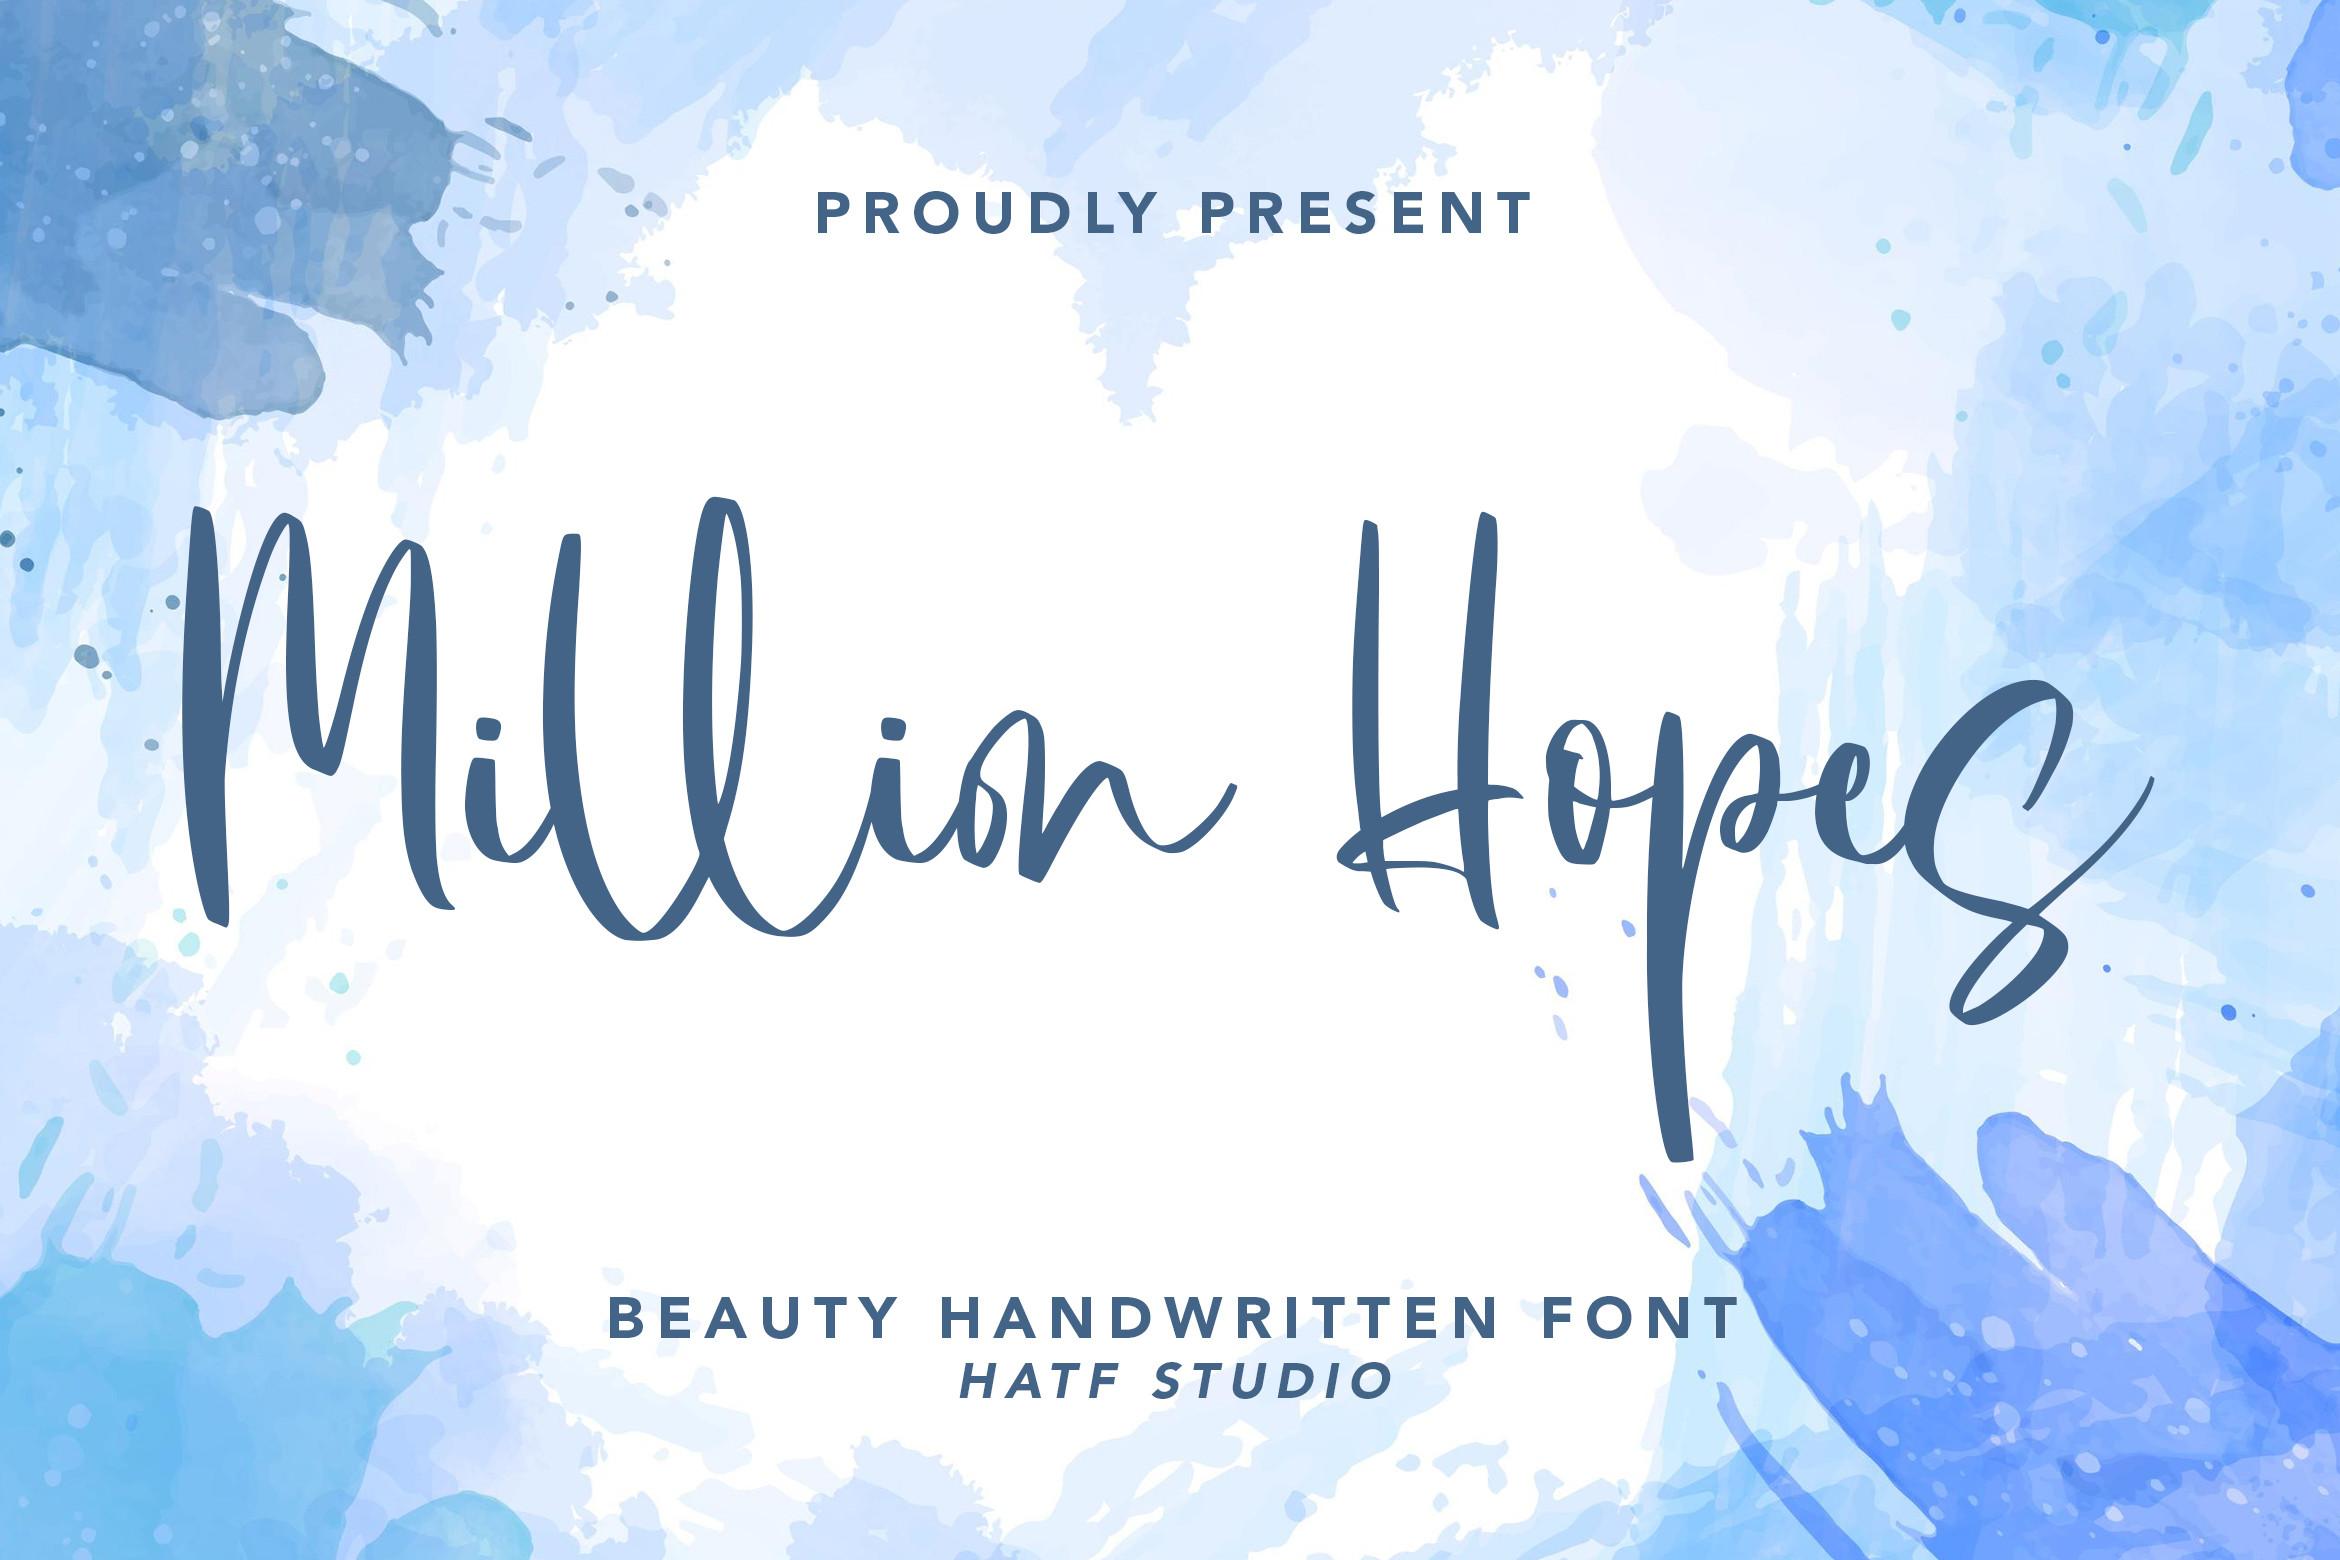 Million Hopes Font